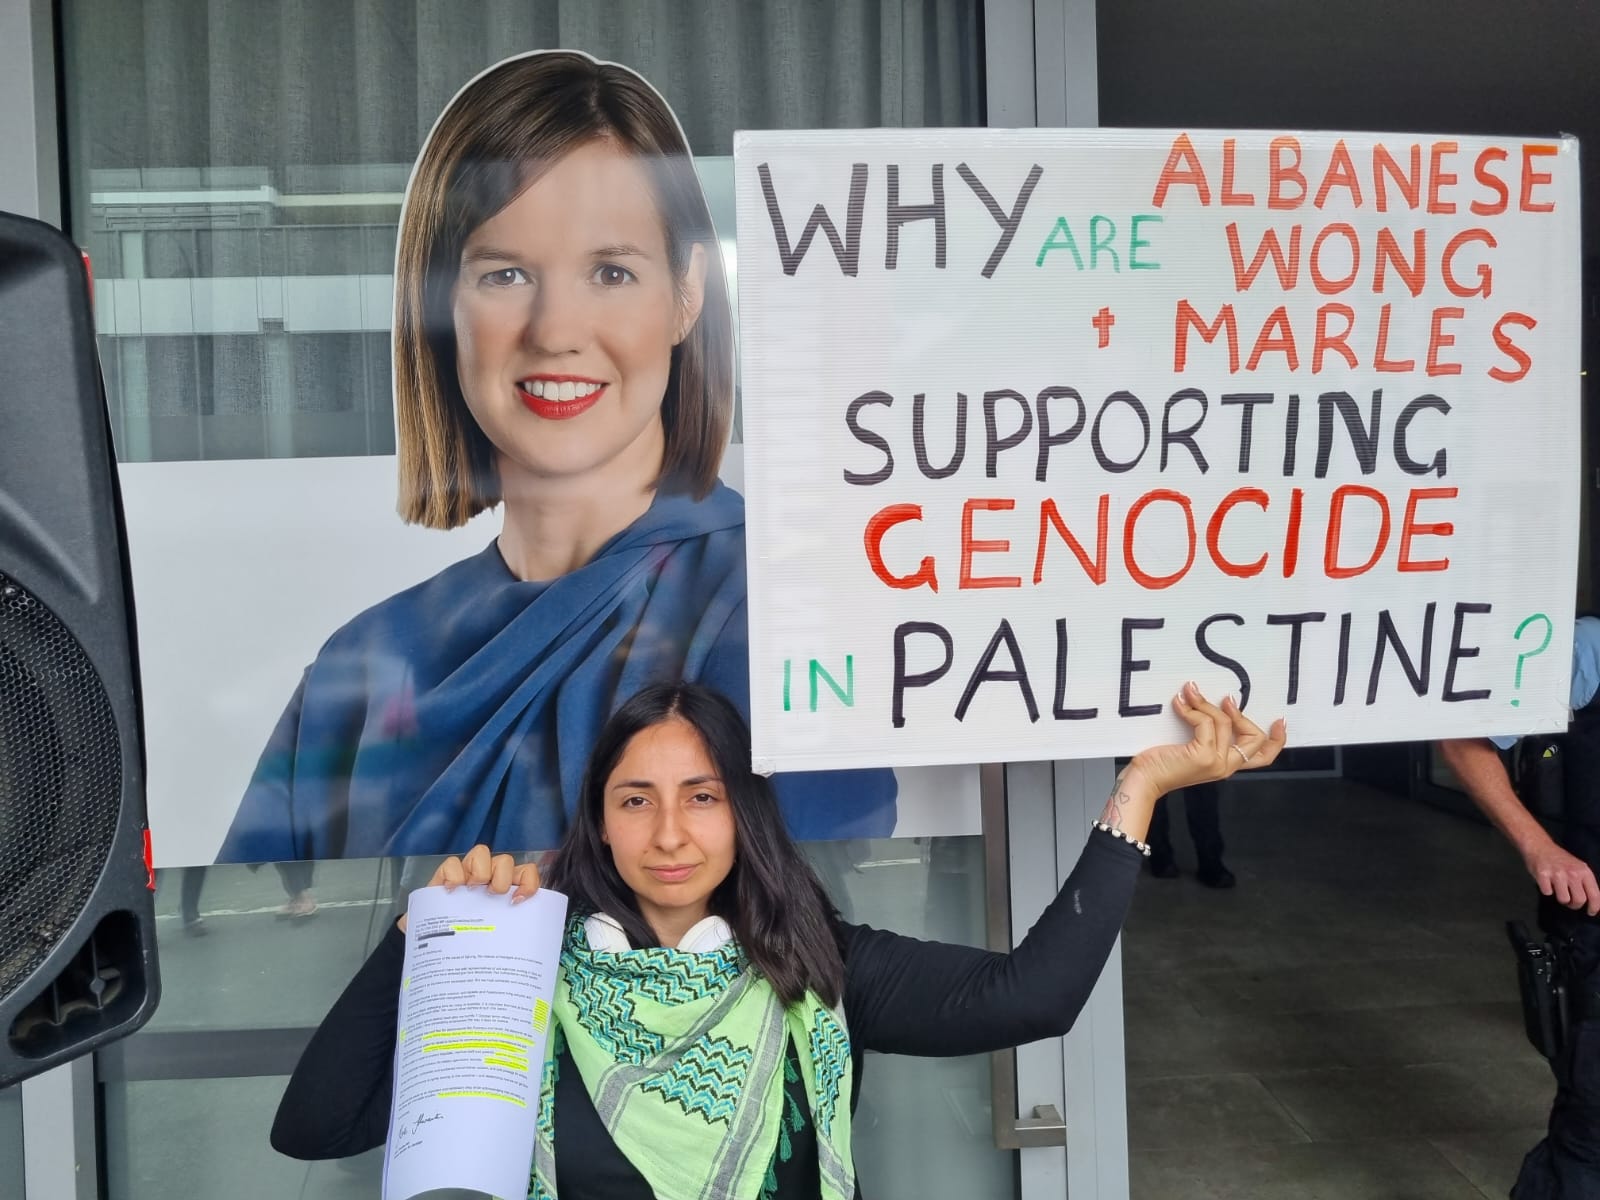 Free Palestine rally outside Kate Thwaites' office